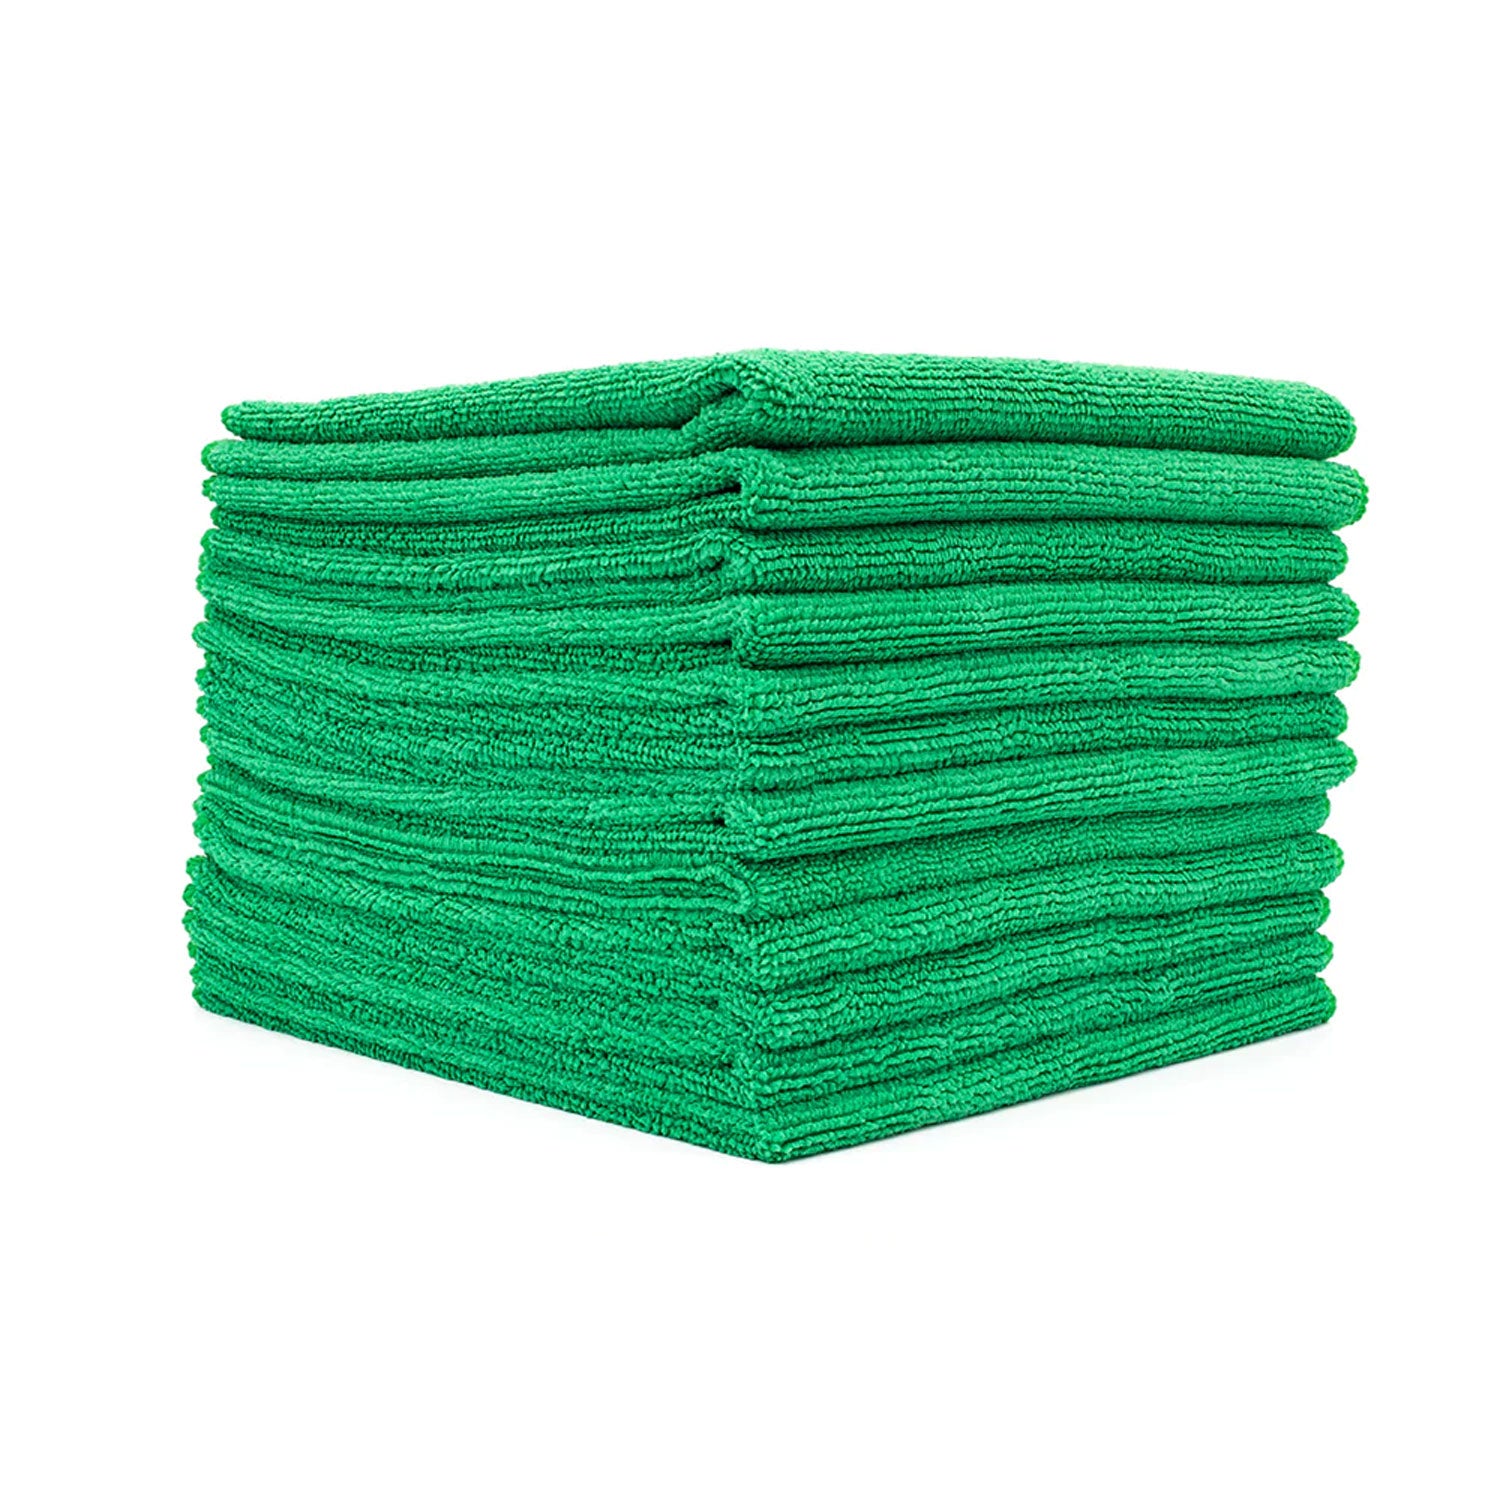 green-stitched-edge-towels